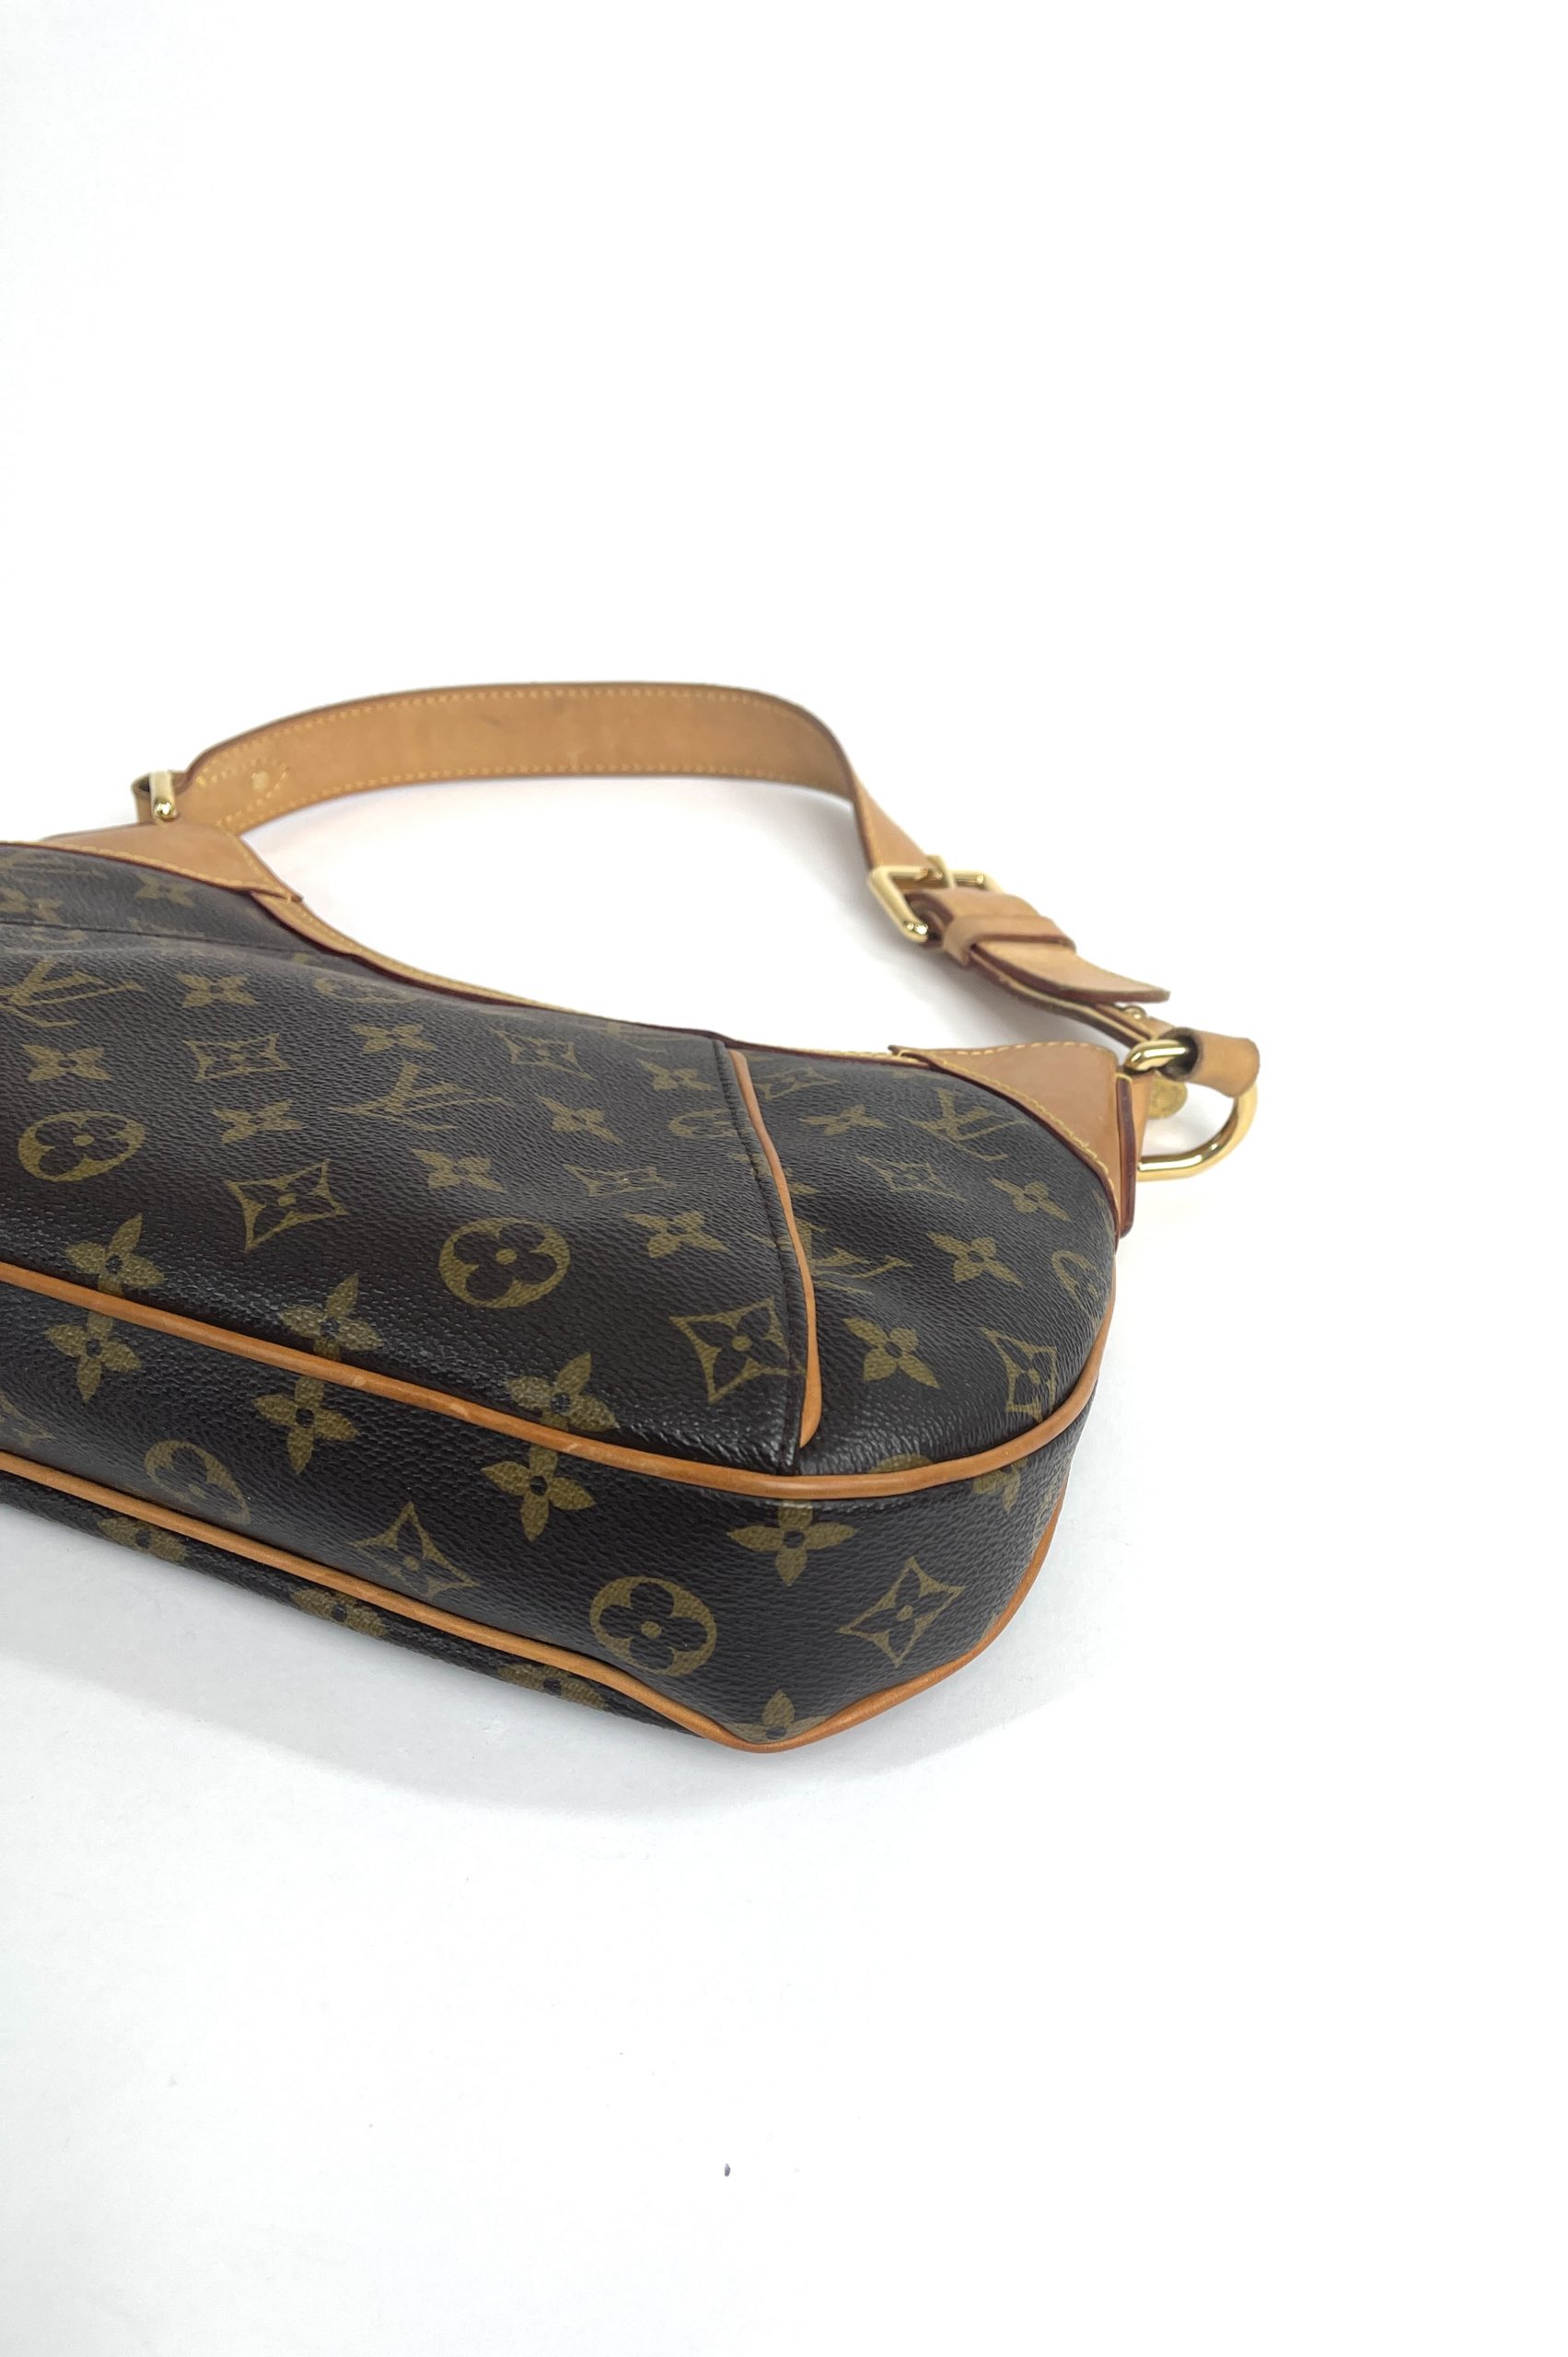 Shop for Louis Vuitton Monogram Canvas Leather Croissant PM Shoulder Bag -  Shipped from USA